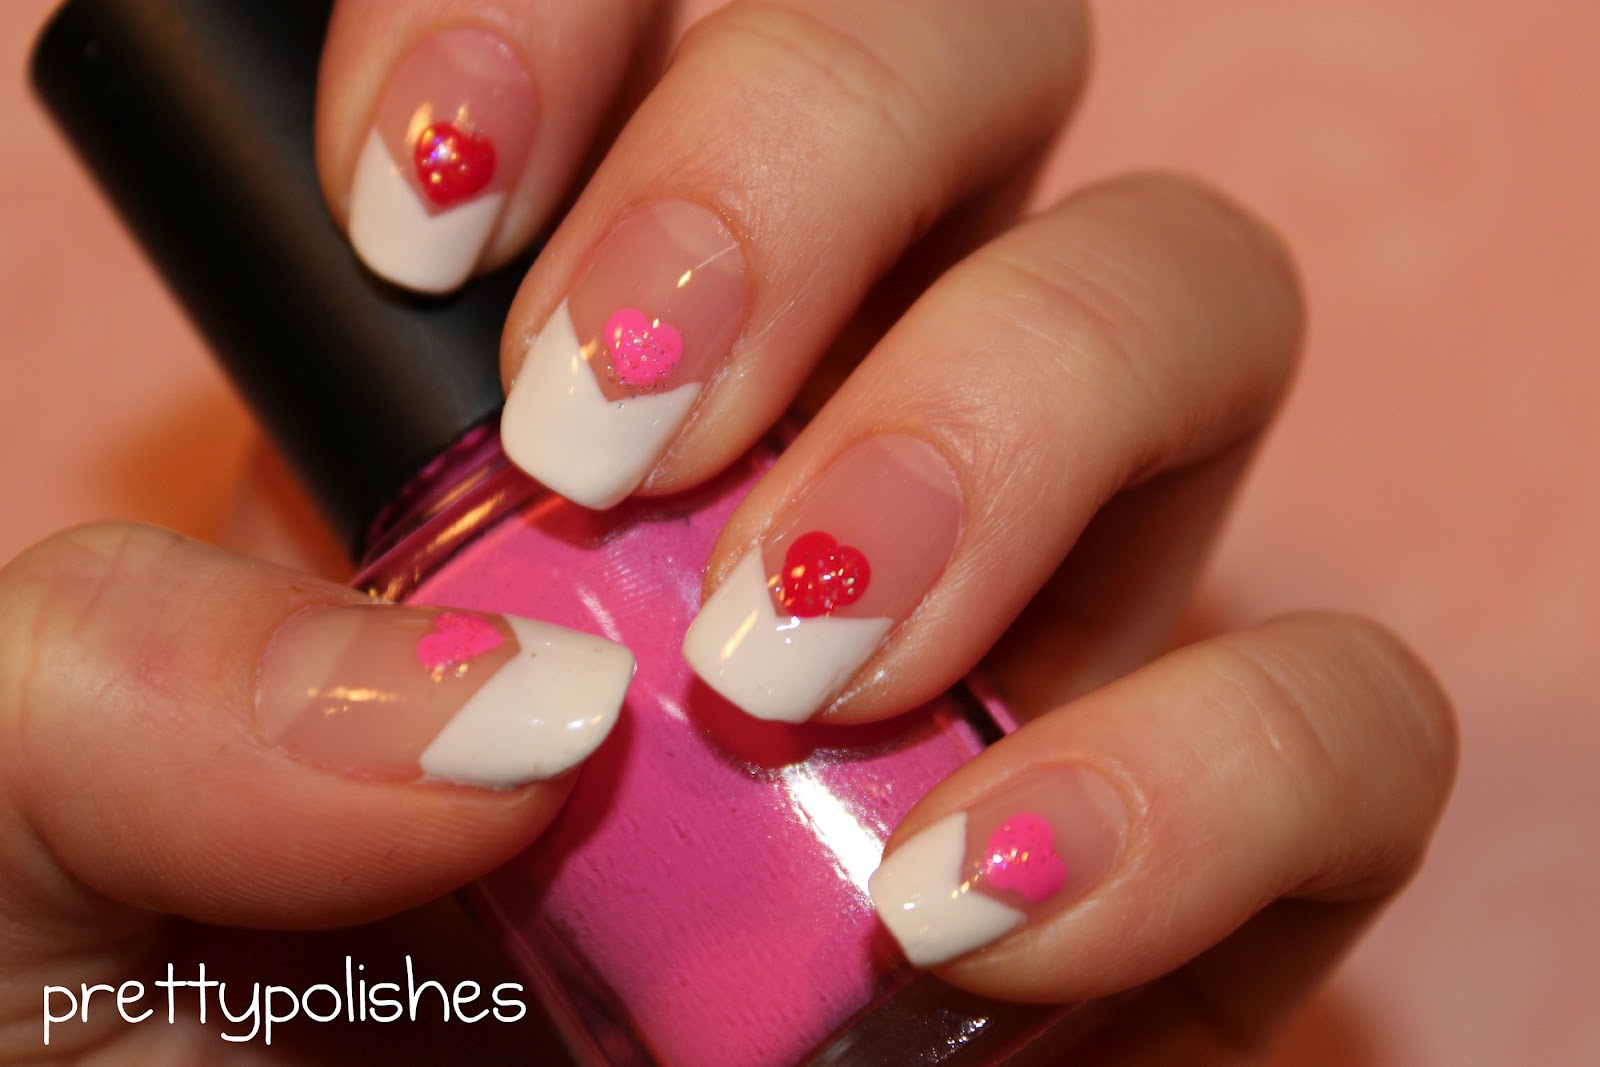 prettypolishes Simple Valentine's Day Nails